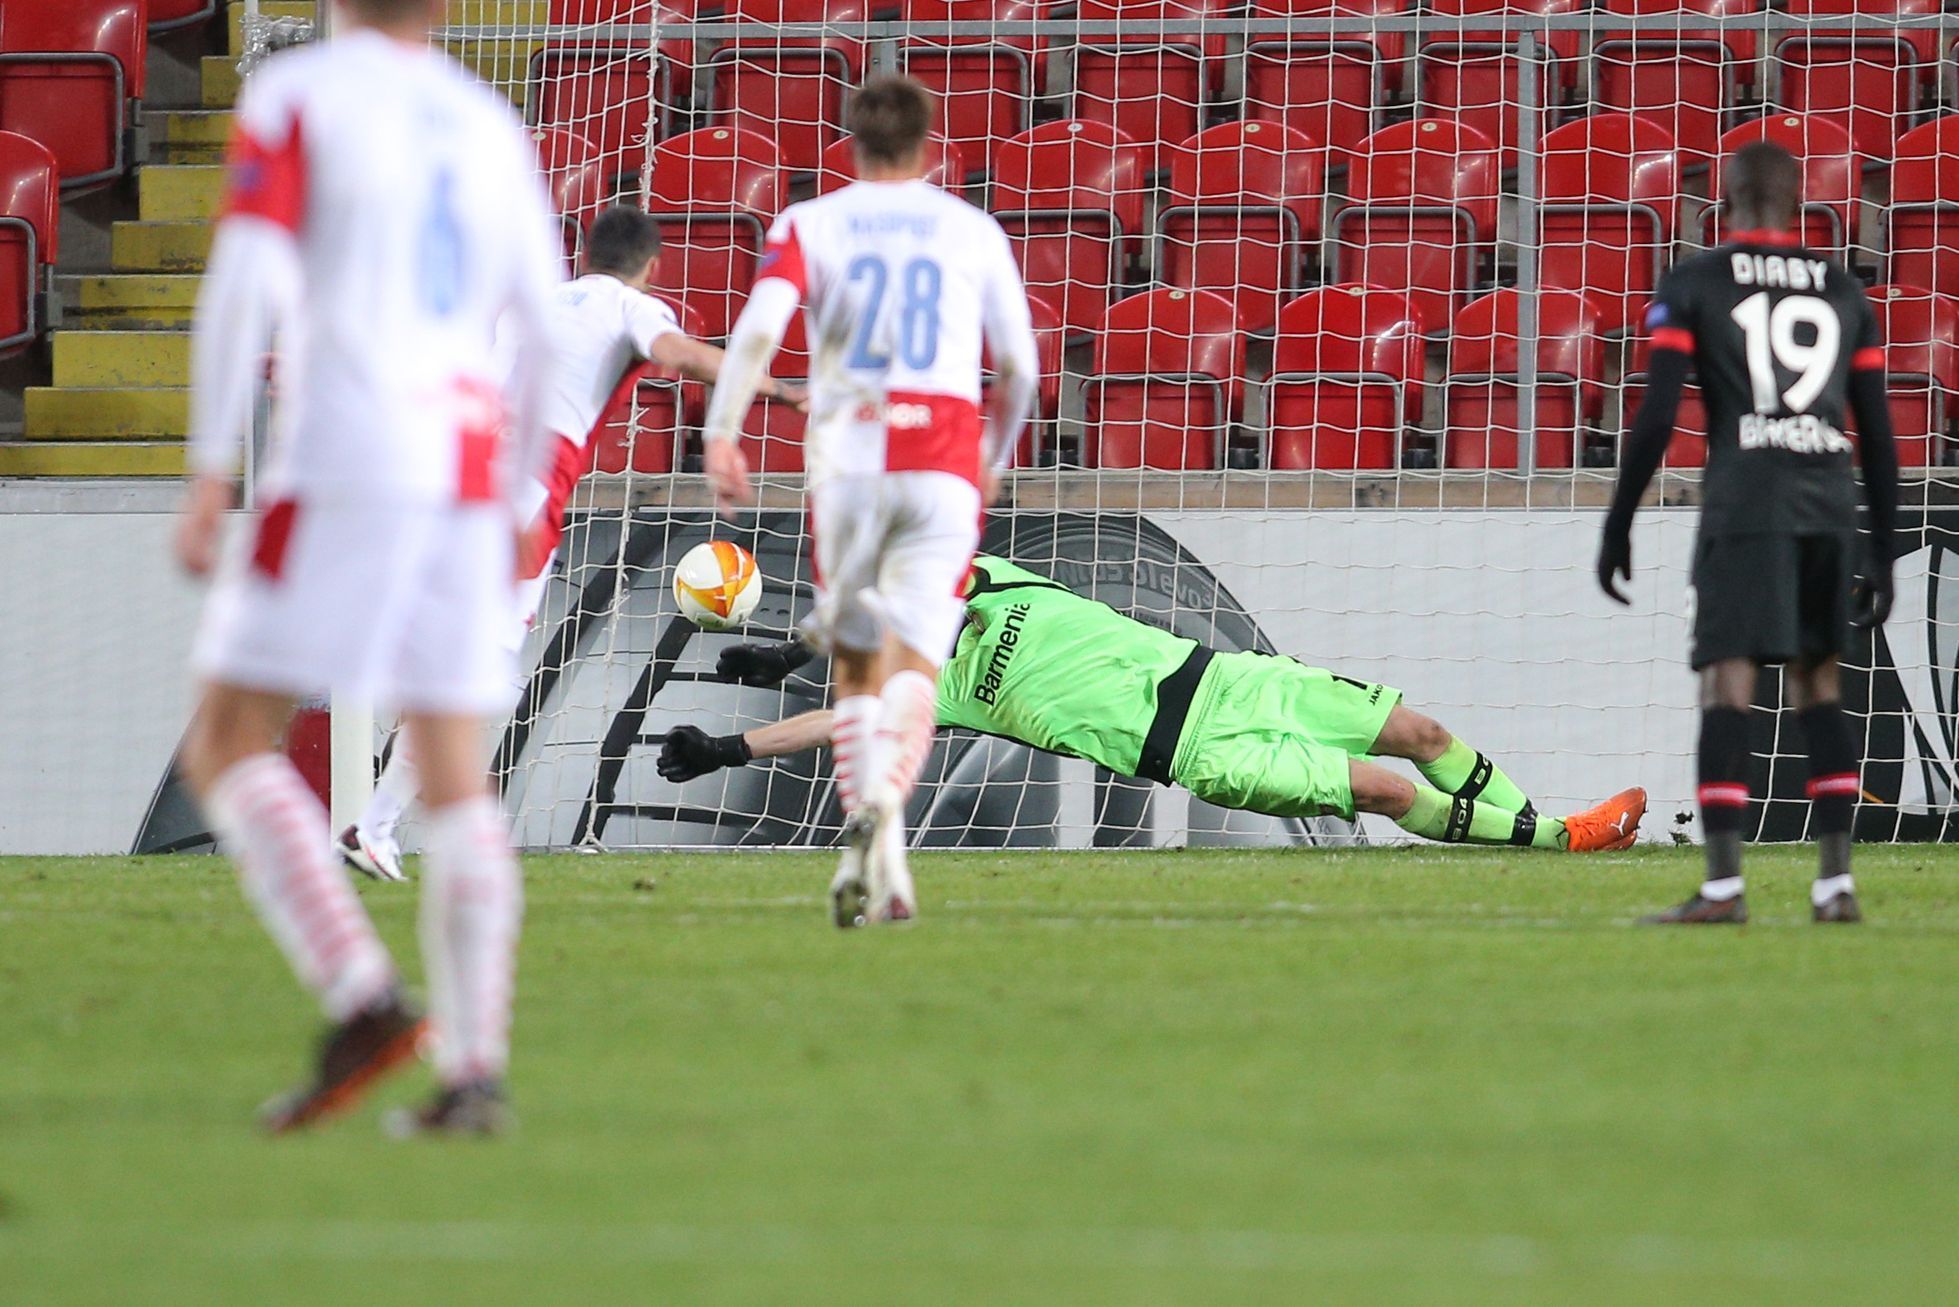 Nicolae Stanciu neproměnil penaltu v zápase Evropské ligy Slavia Praha - Bayer Leverkusen